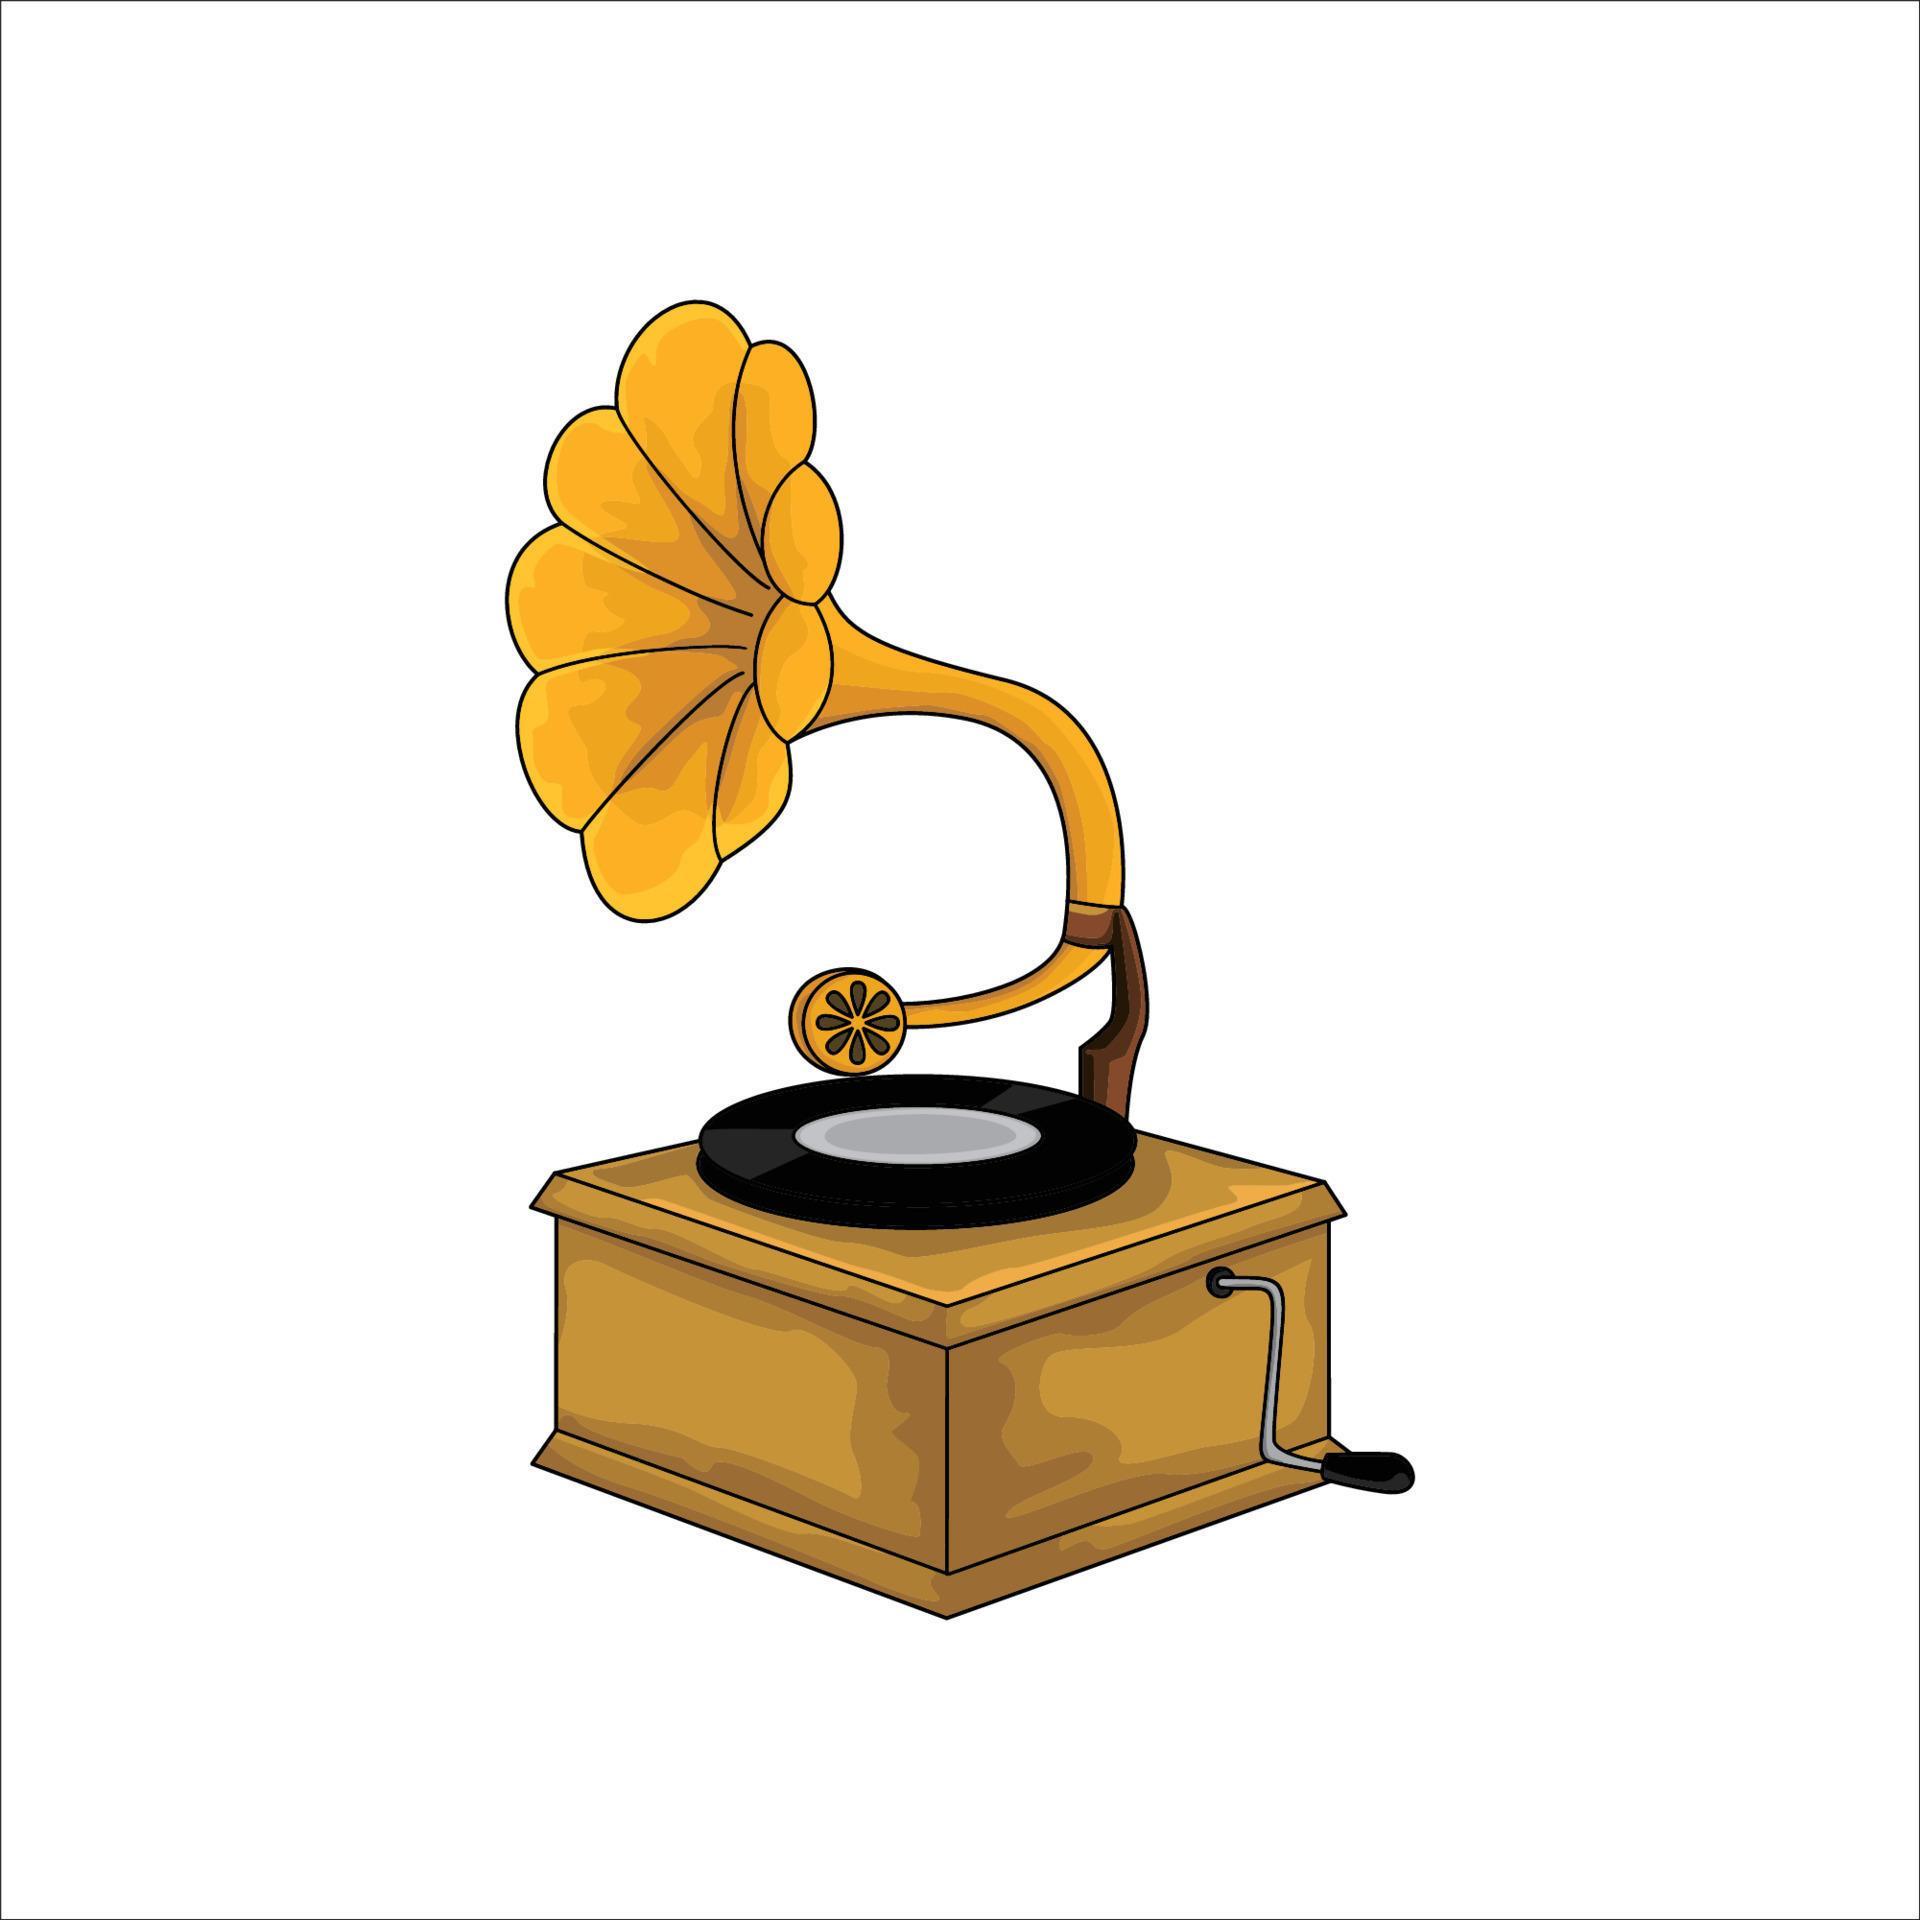 gramophone vector illustration. old music instrument design and symbol ...